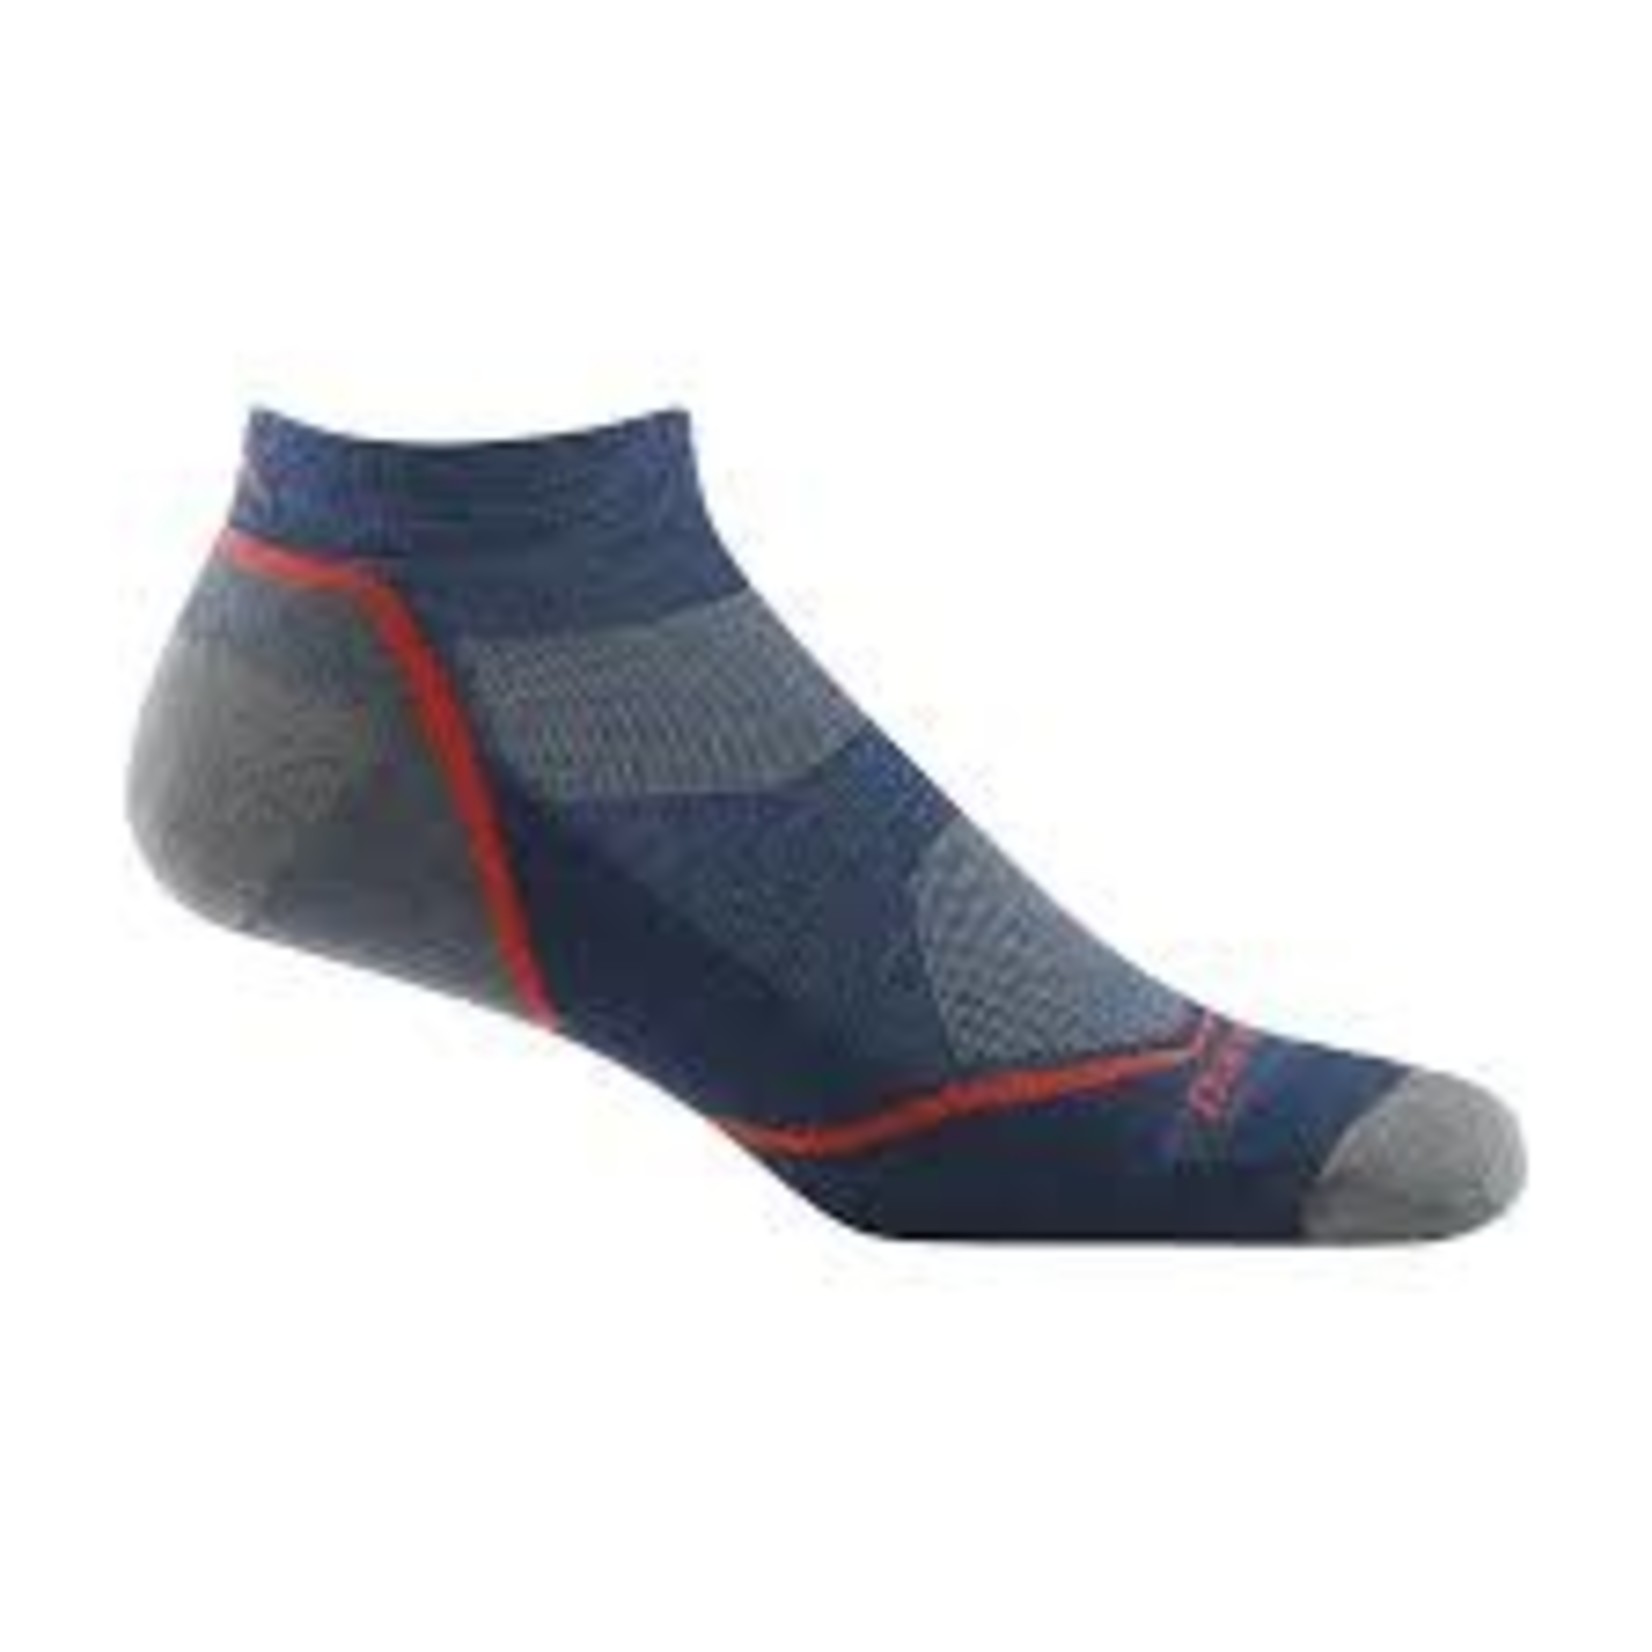 Darn Tough Socks Darn Tough Socks Merino Wool No Show Hike/Trek Light w/ Cushion 1990